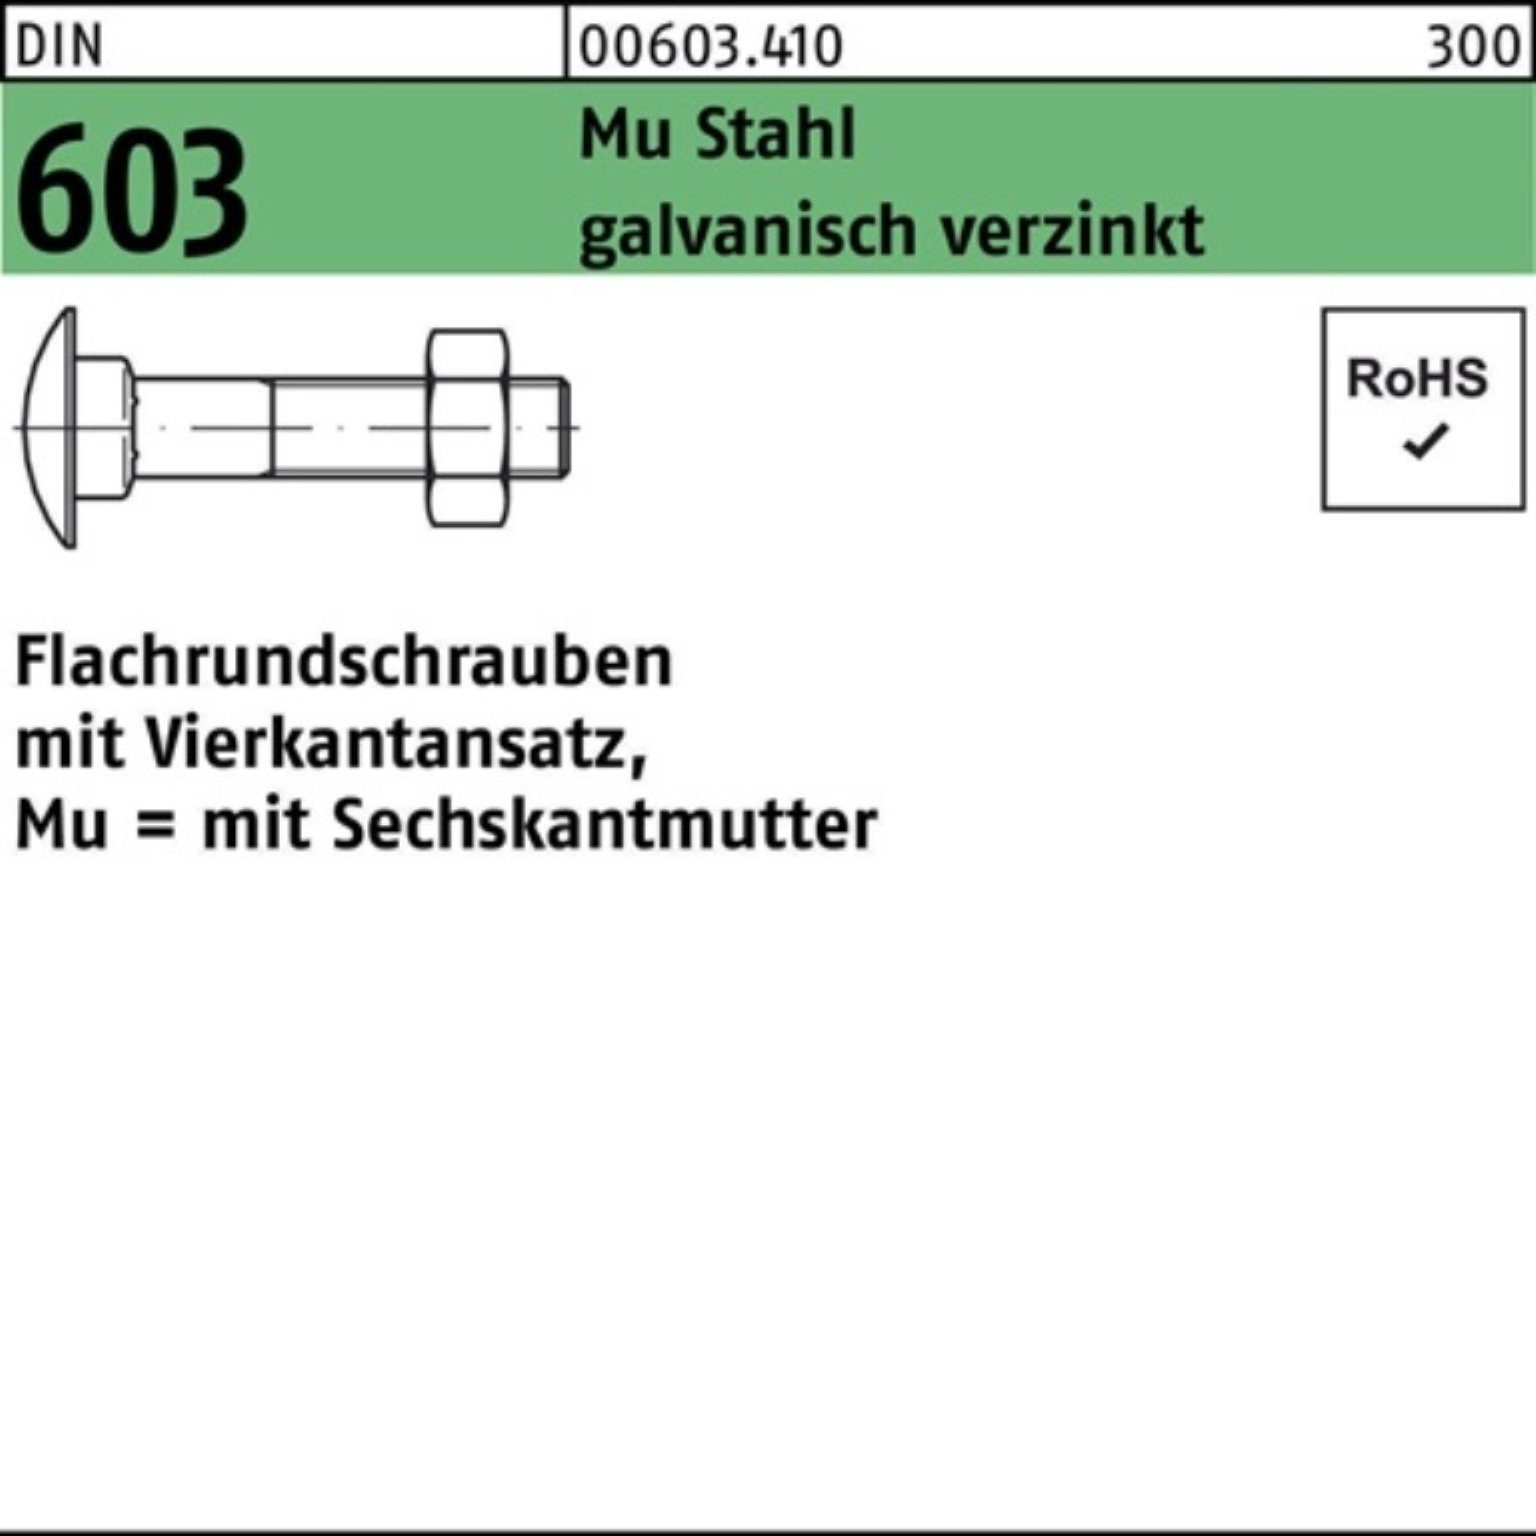 M 200er 603 Vierkantansatz/6-ktmutter Pack Schraube Reyher Flachrundschraube M8x75 DIN